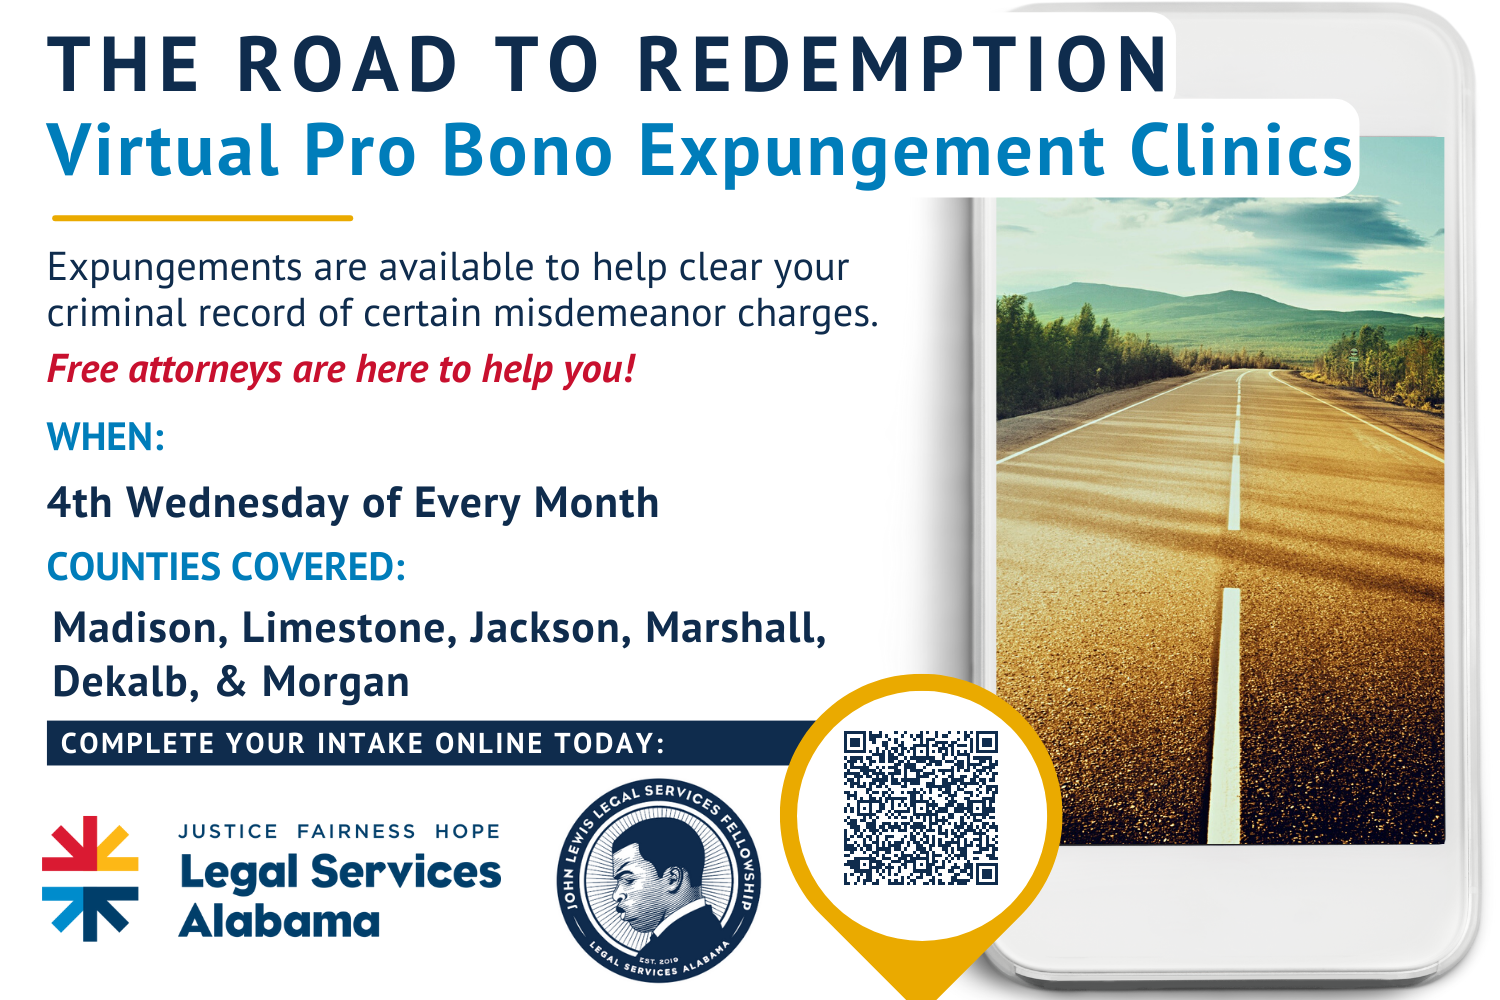 Virtual Pro Bono Road to Redemption Expungement Clinics – North Alabama